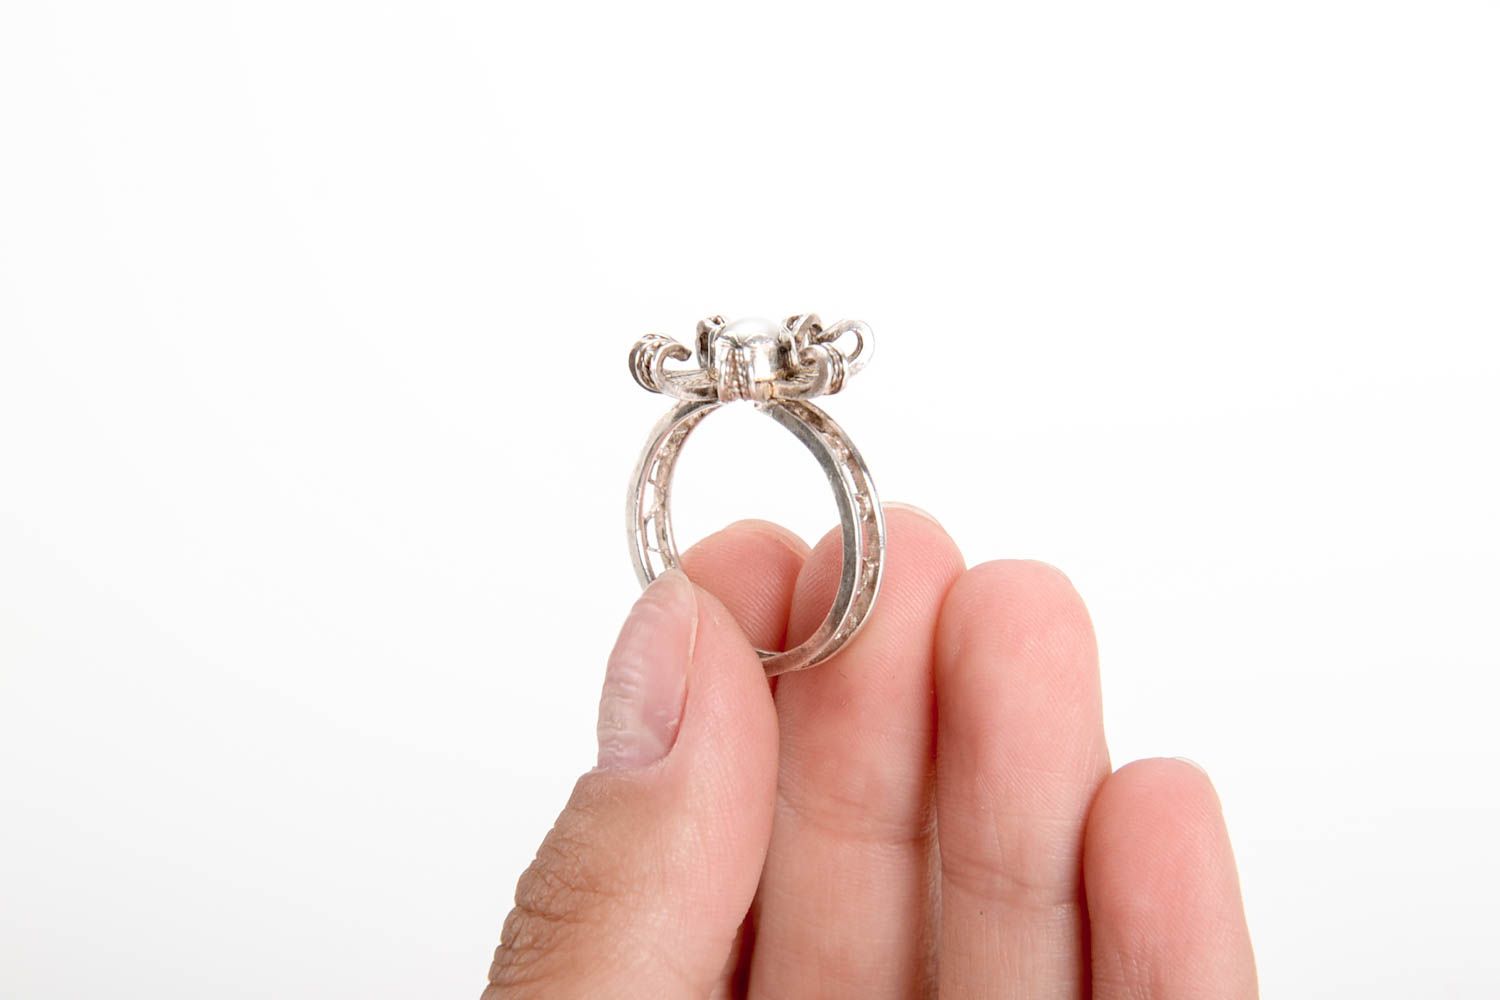 Handmade schöner Ring Damen Modeschmuck originell Geschenk Idee schön foto 5